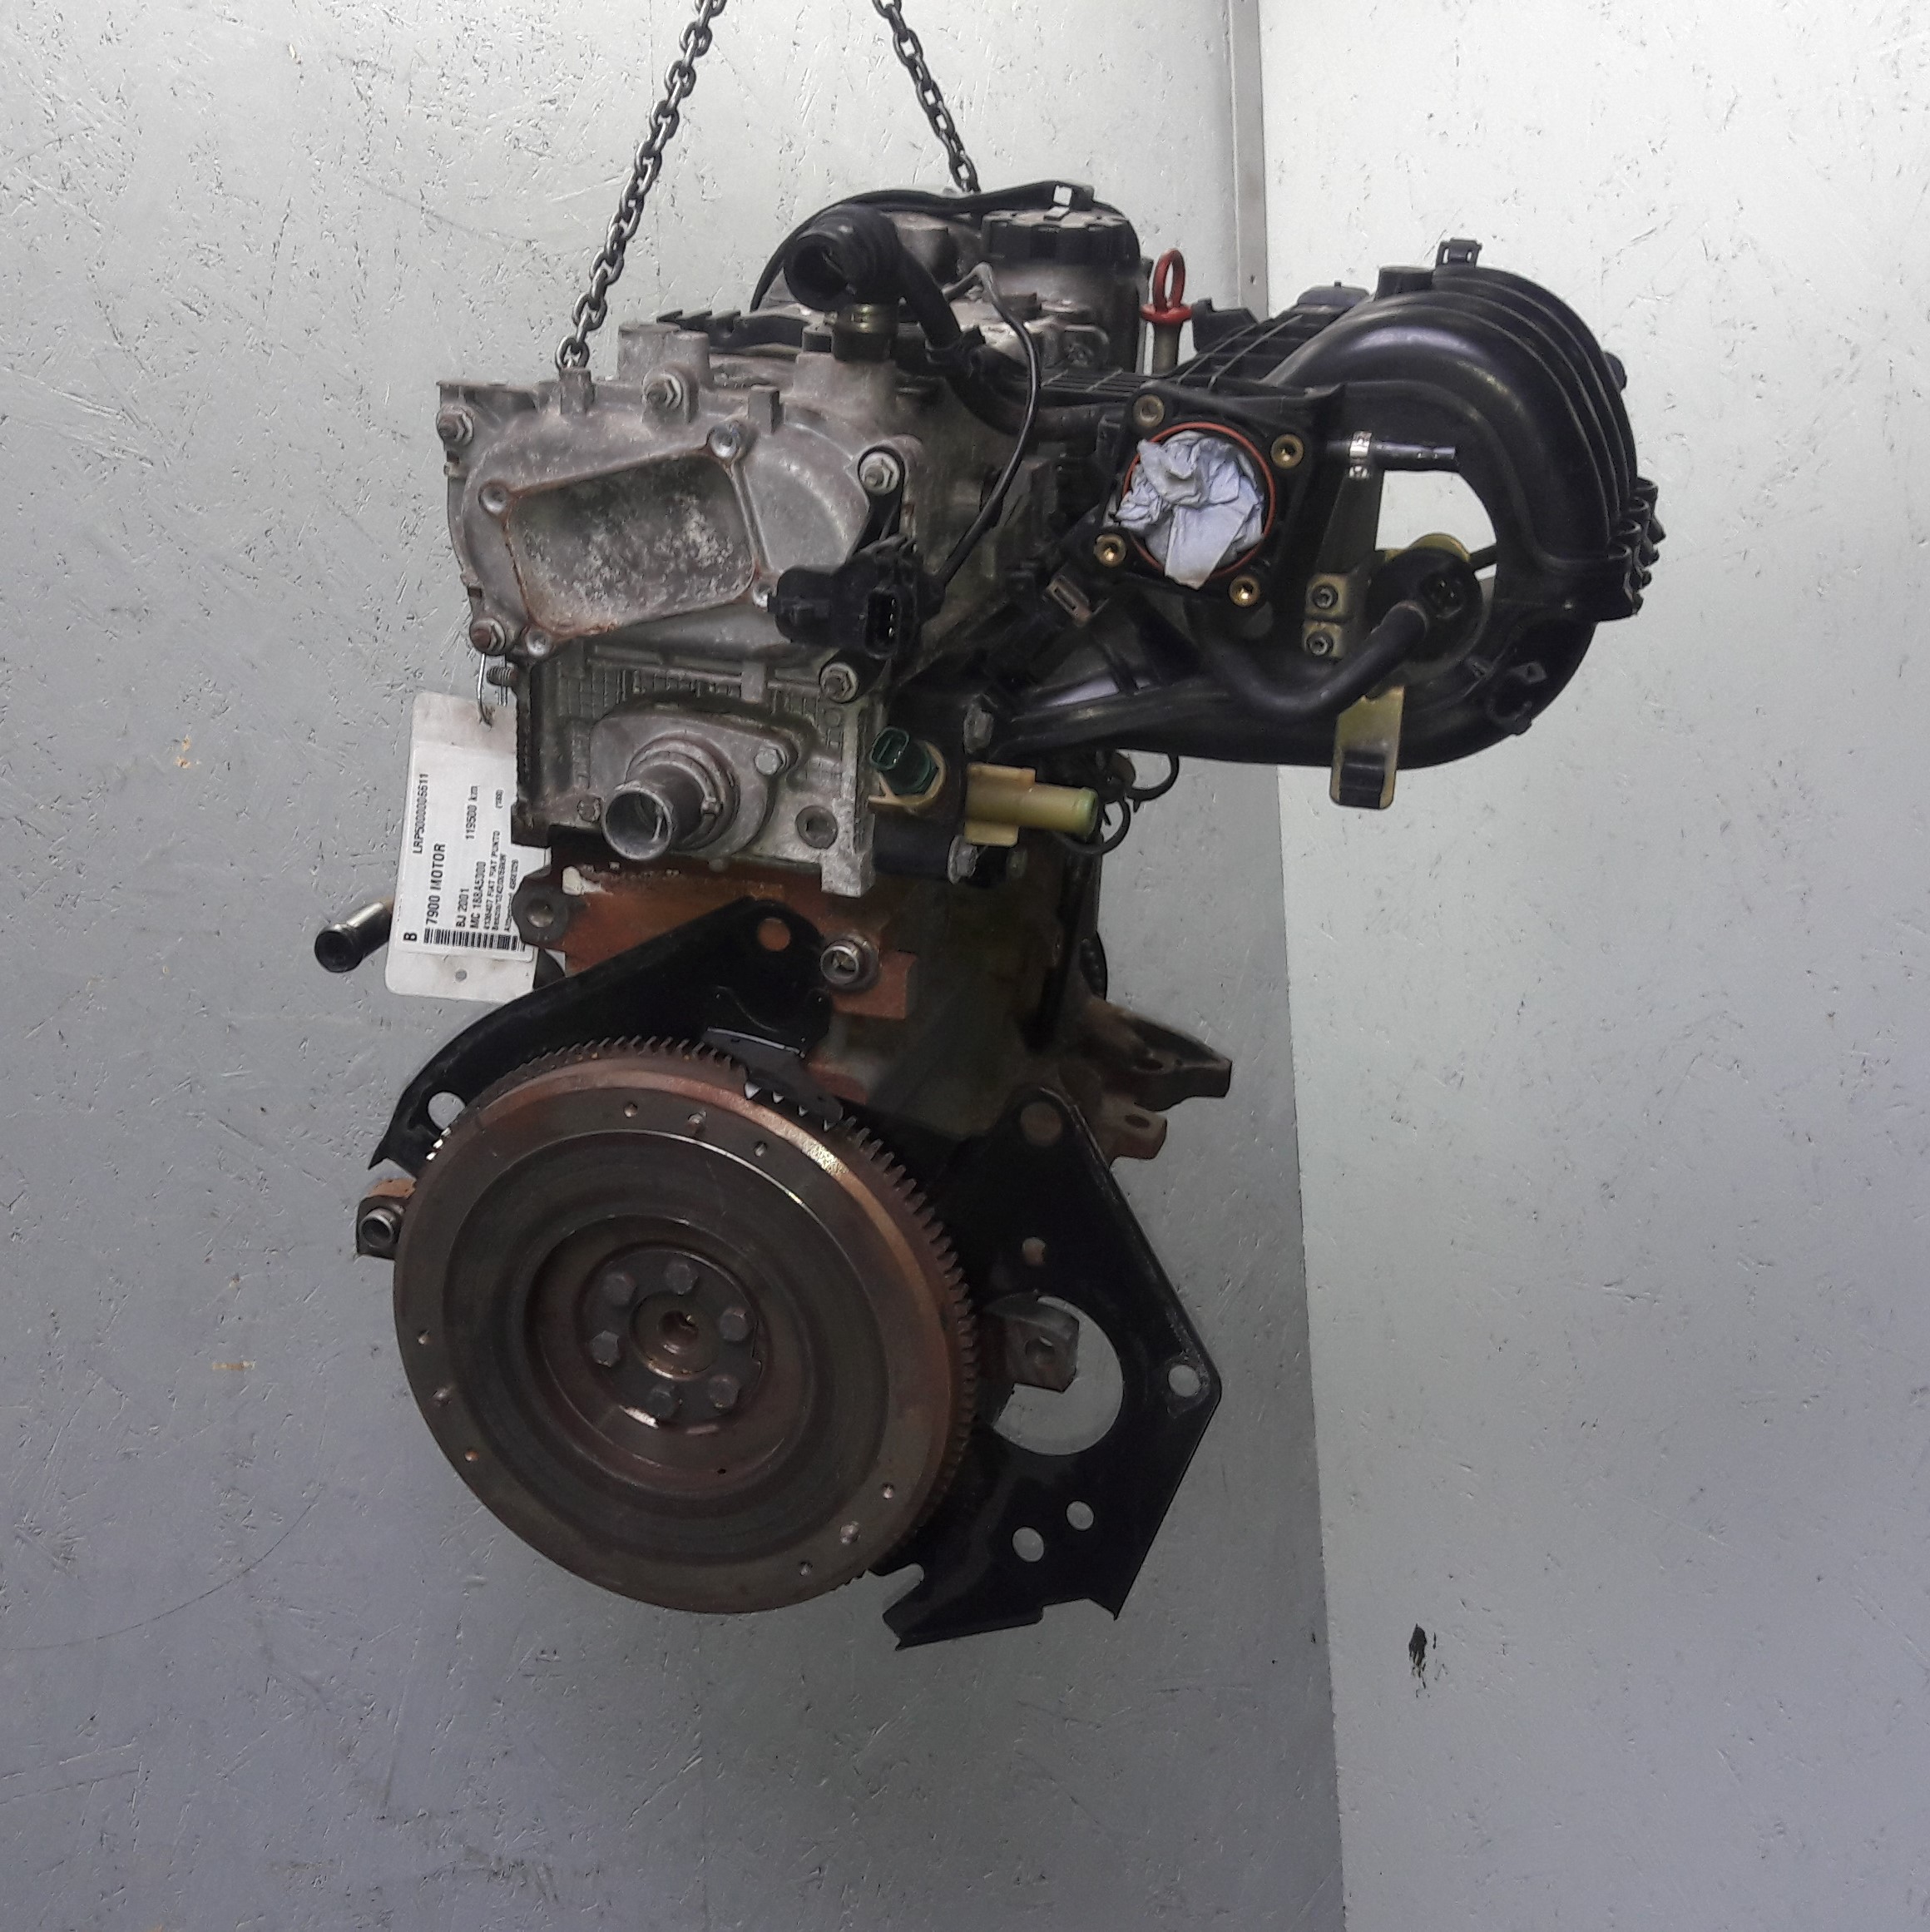 Fiat Punto 188 org Motor 1242ccm 59kW 188A5000 119Tkm geprüft Bj 2001